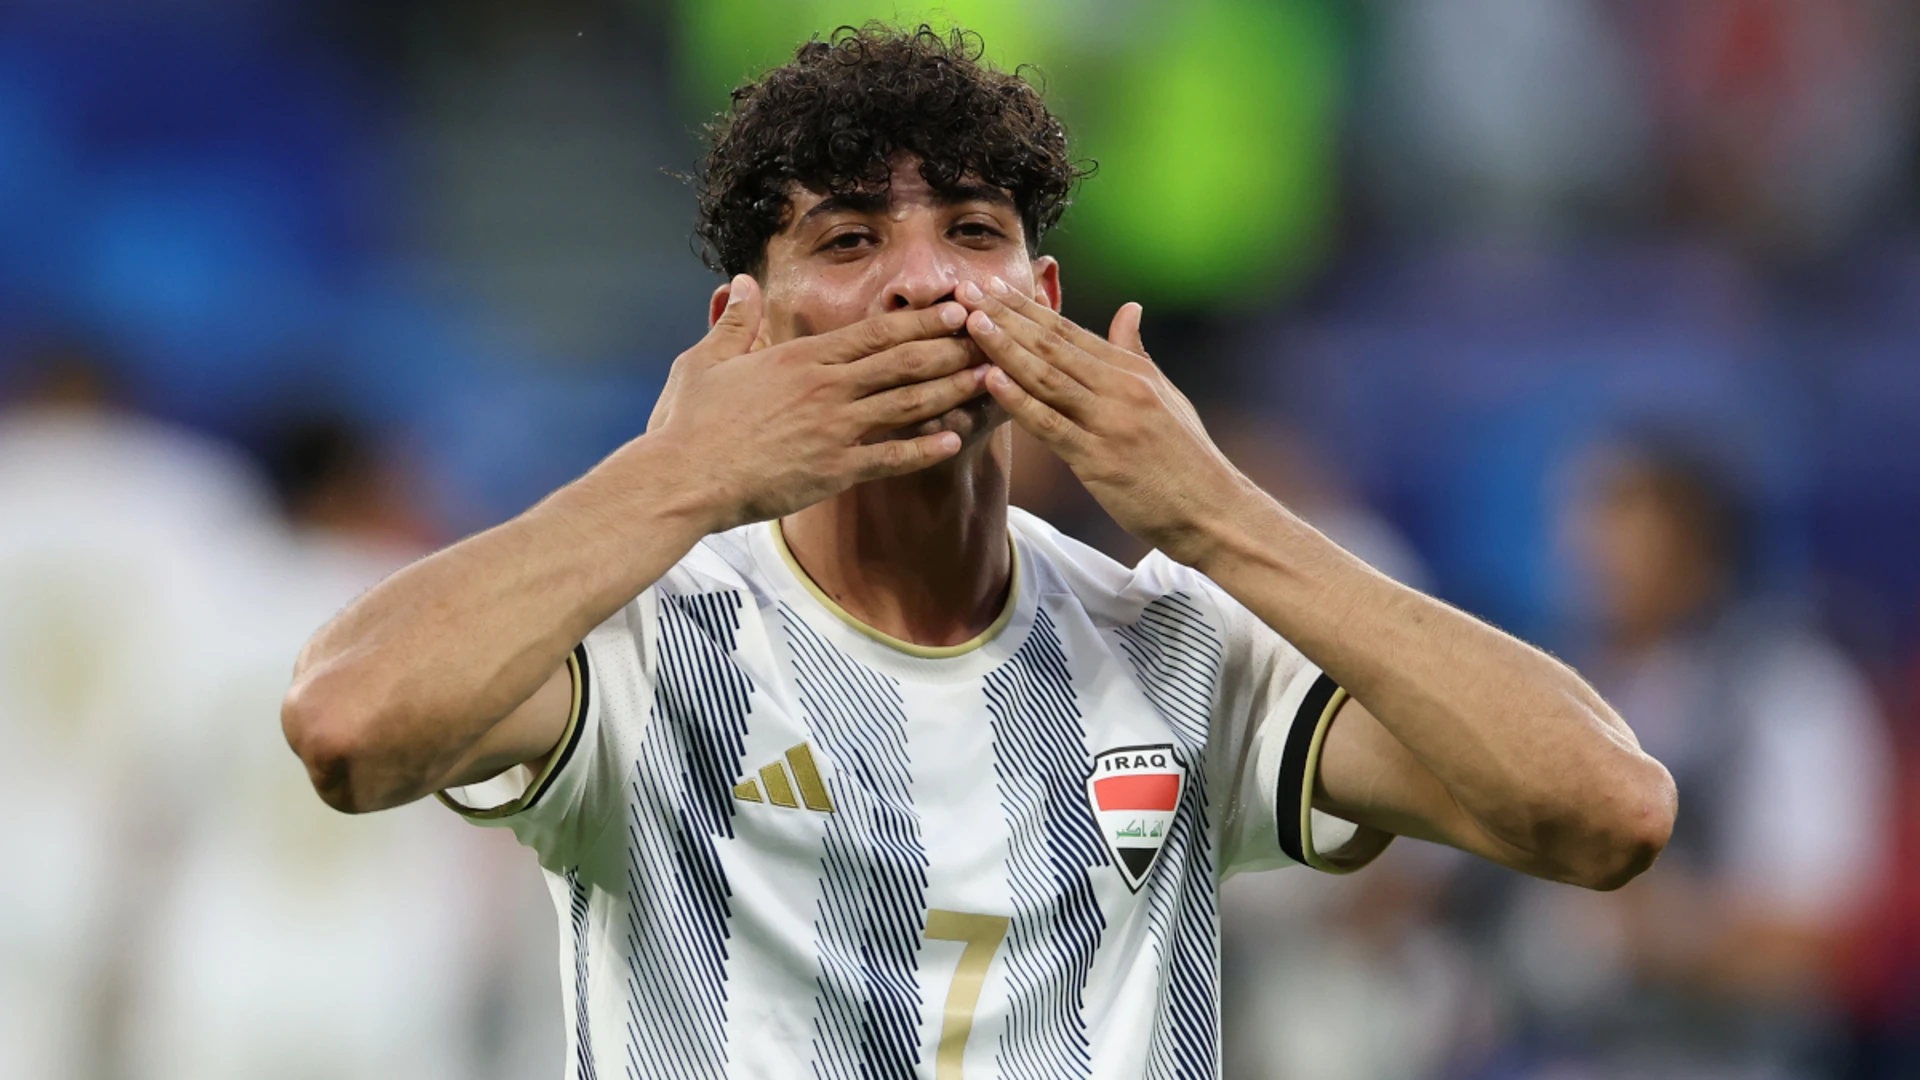 Iraq v Ukraine | Match in 2 minutes | Men's Olympics Football 2024